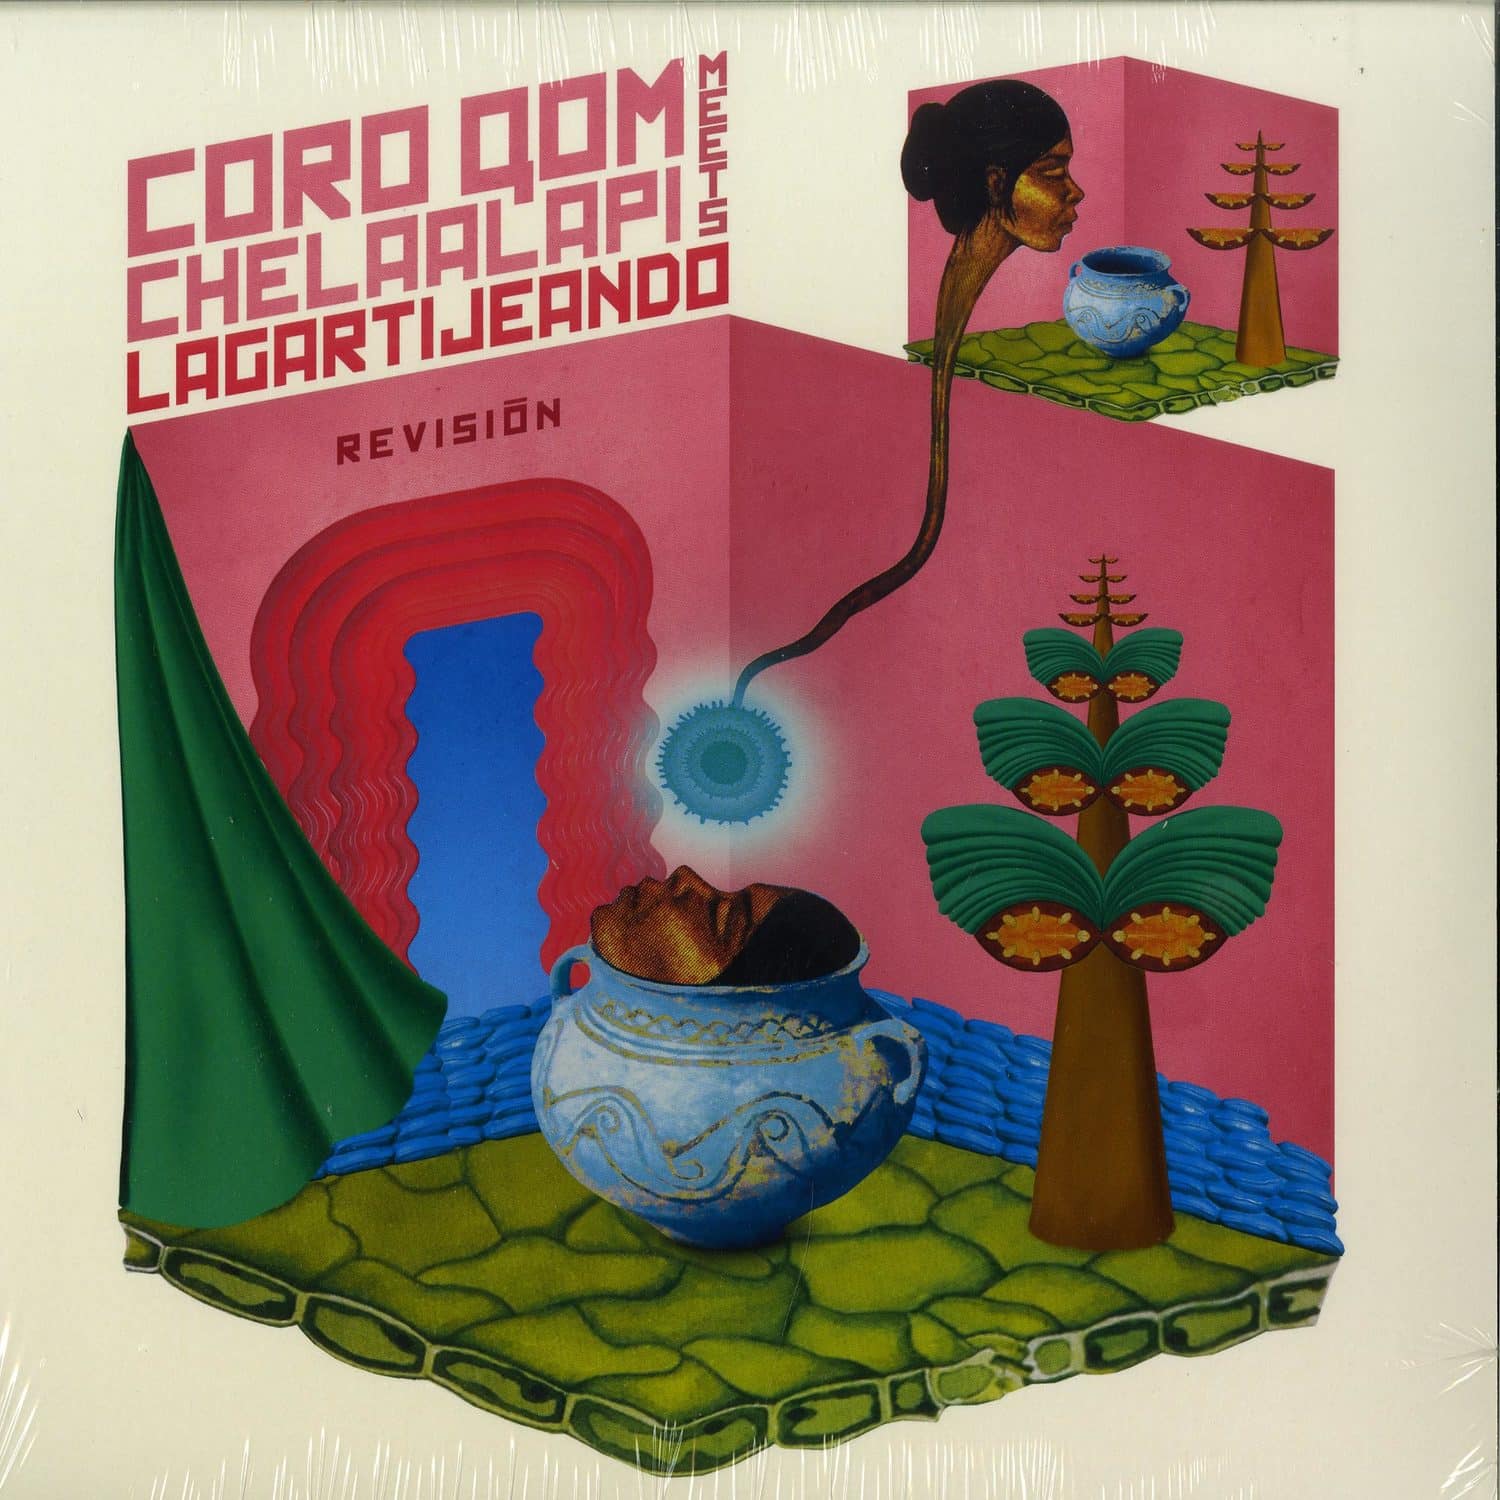 Coro Qom Chelaalapi & Lagartijeando - REVISION EP